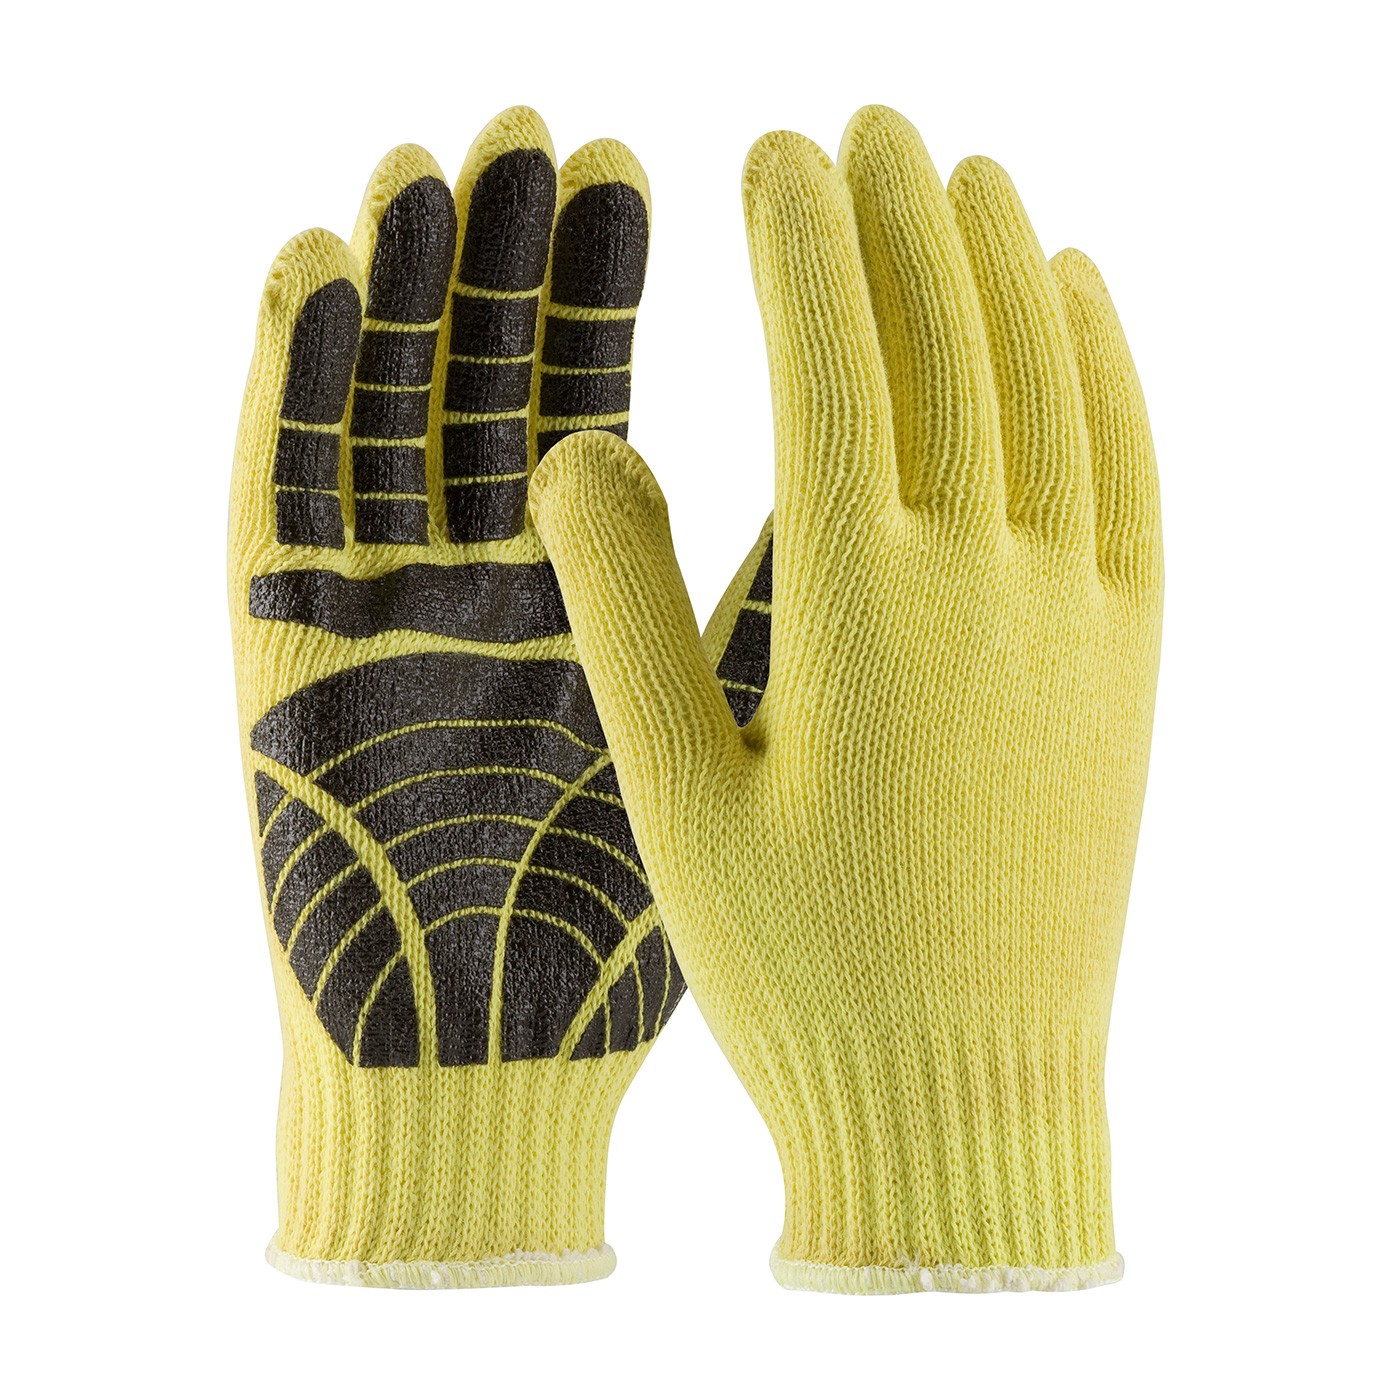 Kut Gard® Seamless Knit Kevlar® Glove with PVC Tiger Paw Grip - Medium Weight  (#08-K300PS)